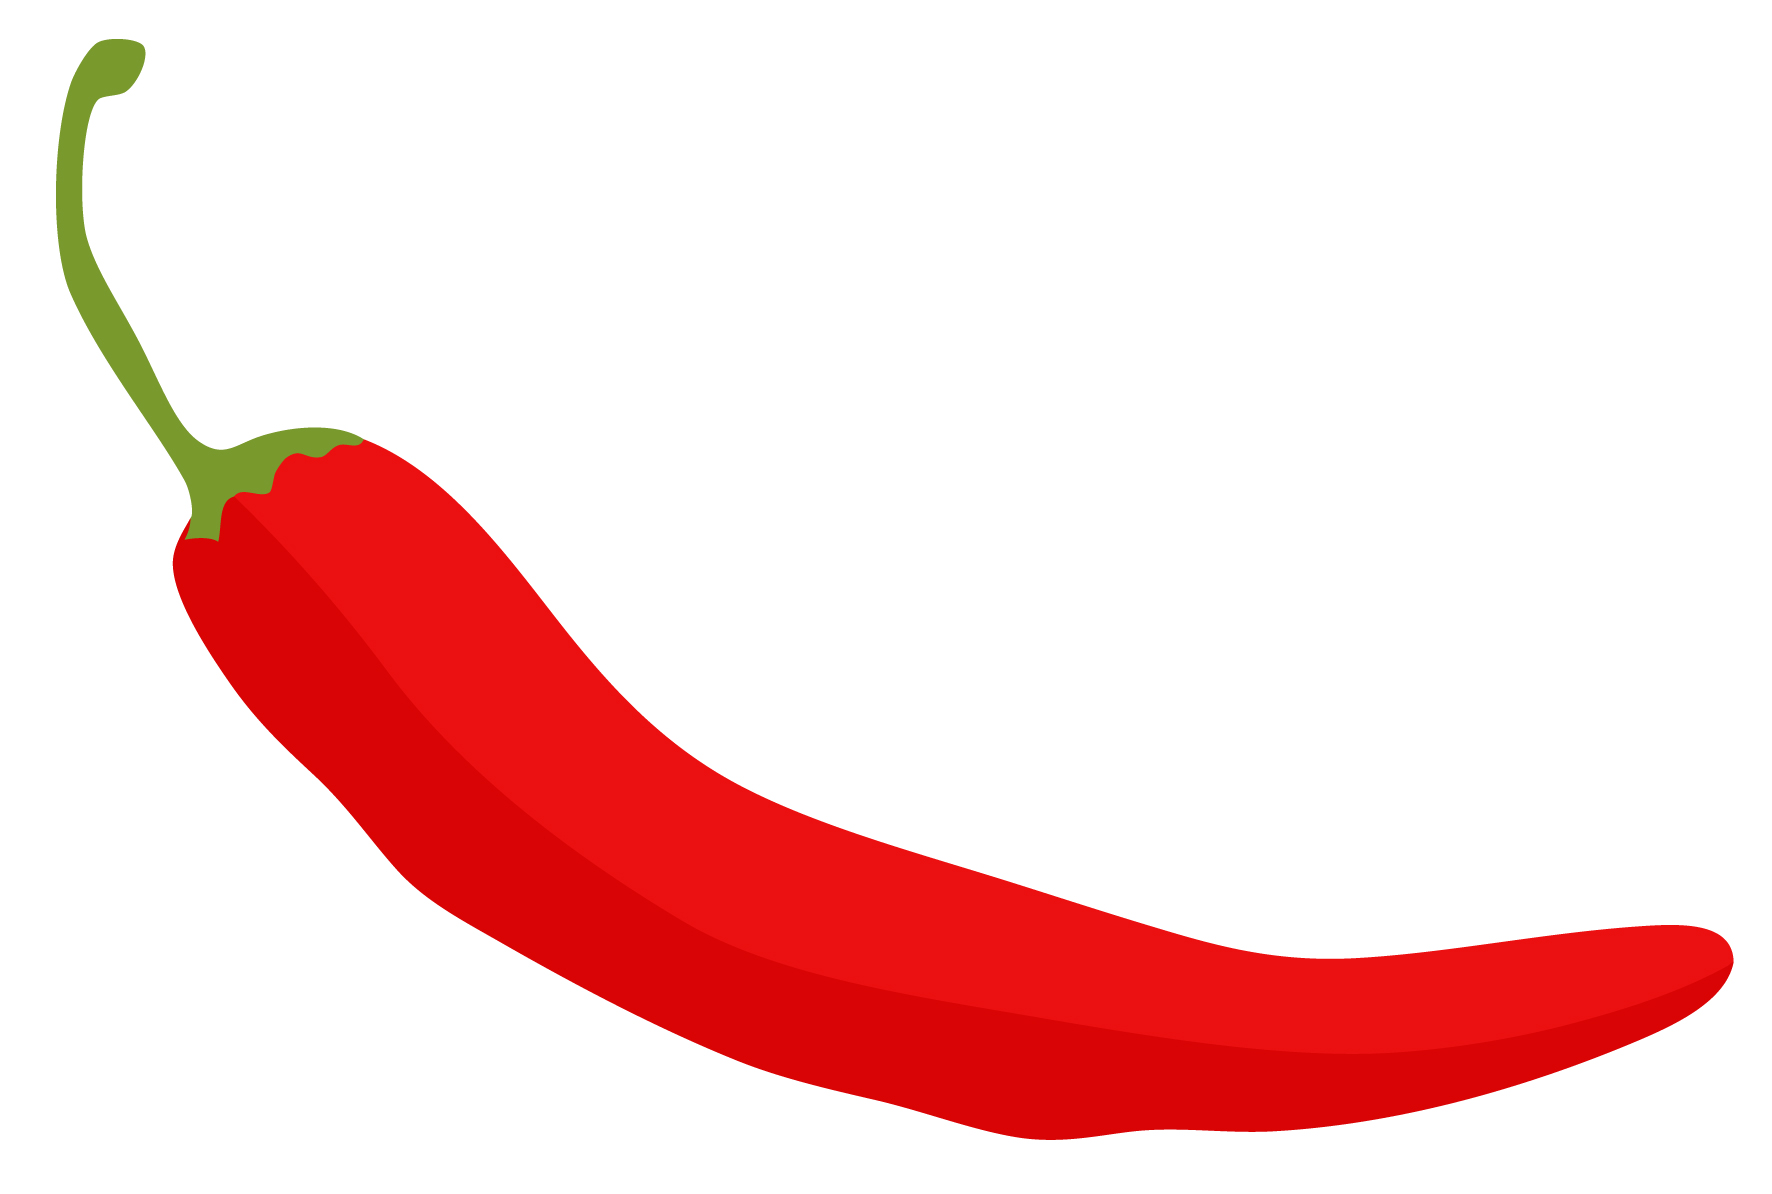 Chili pepper border clipart 3